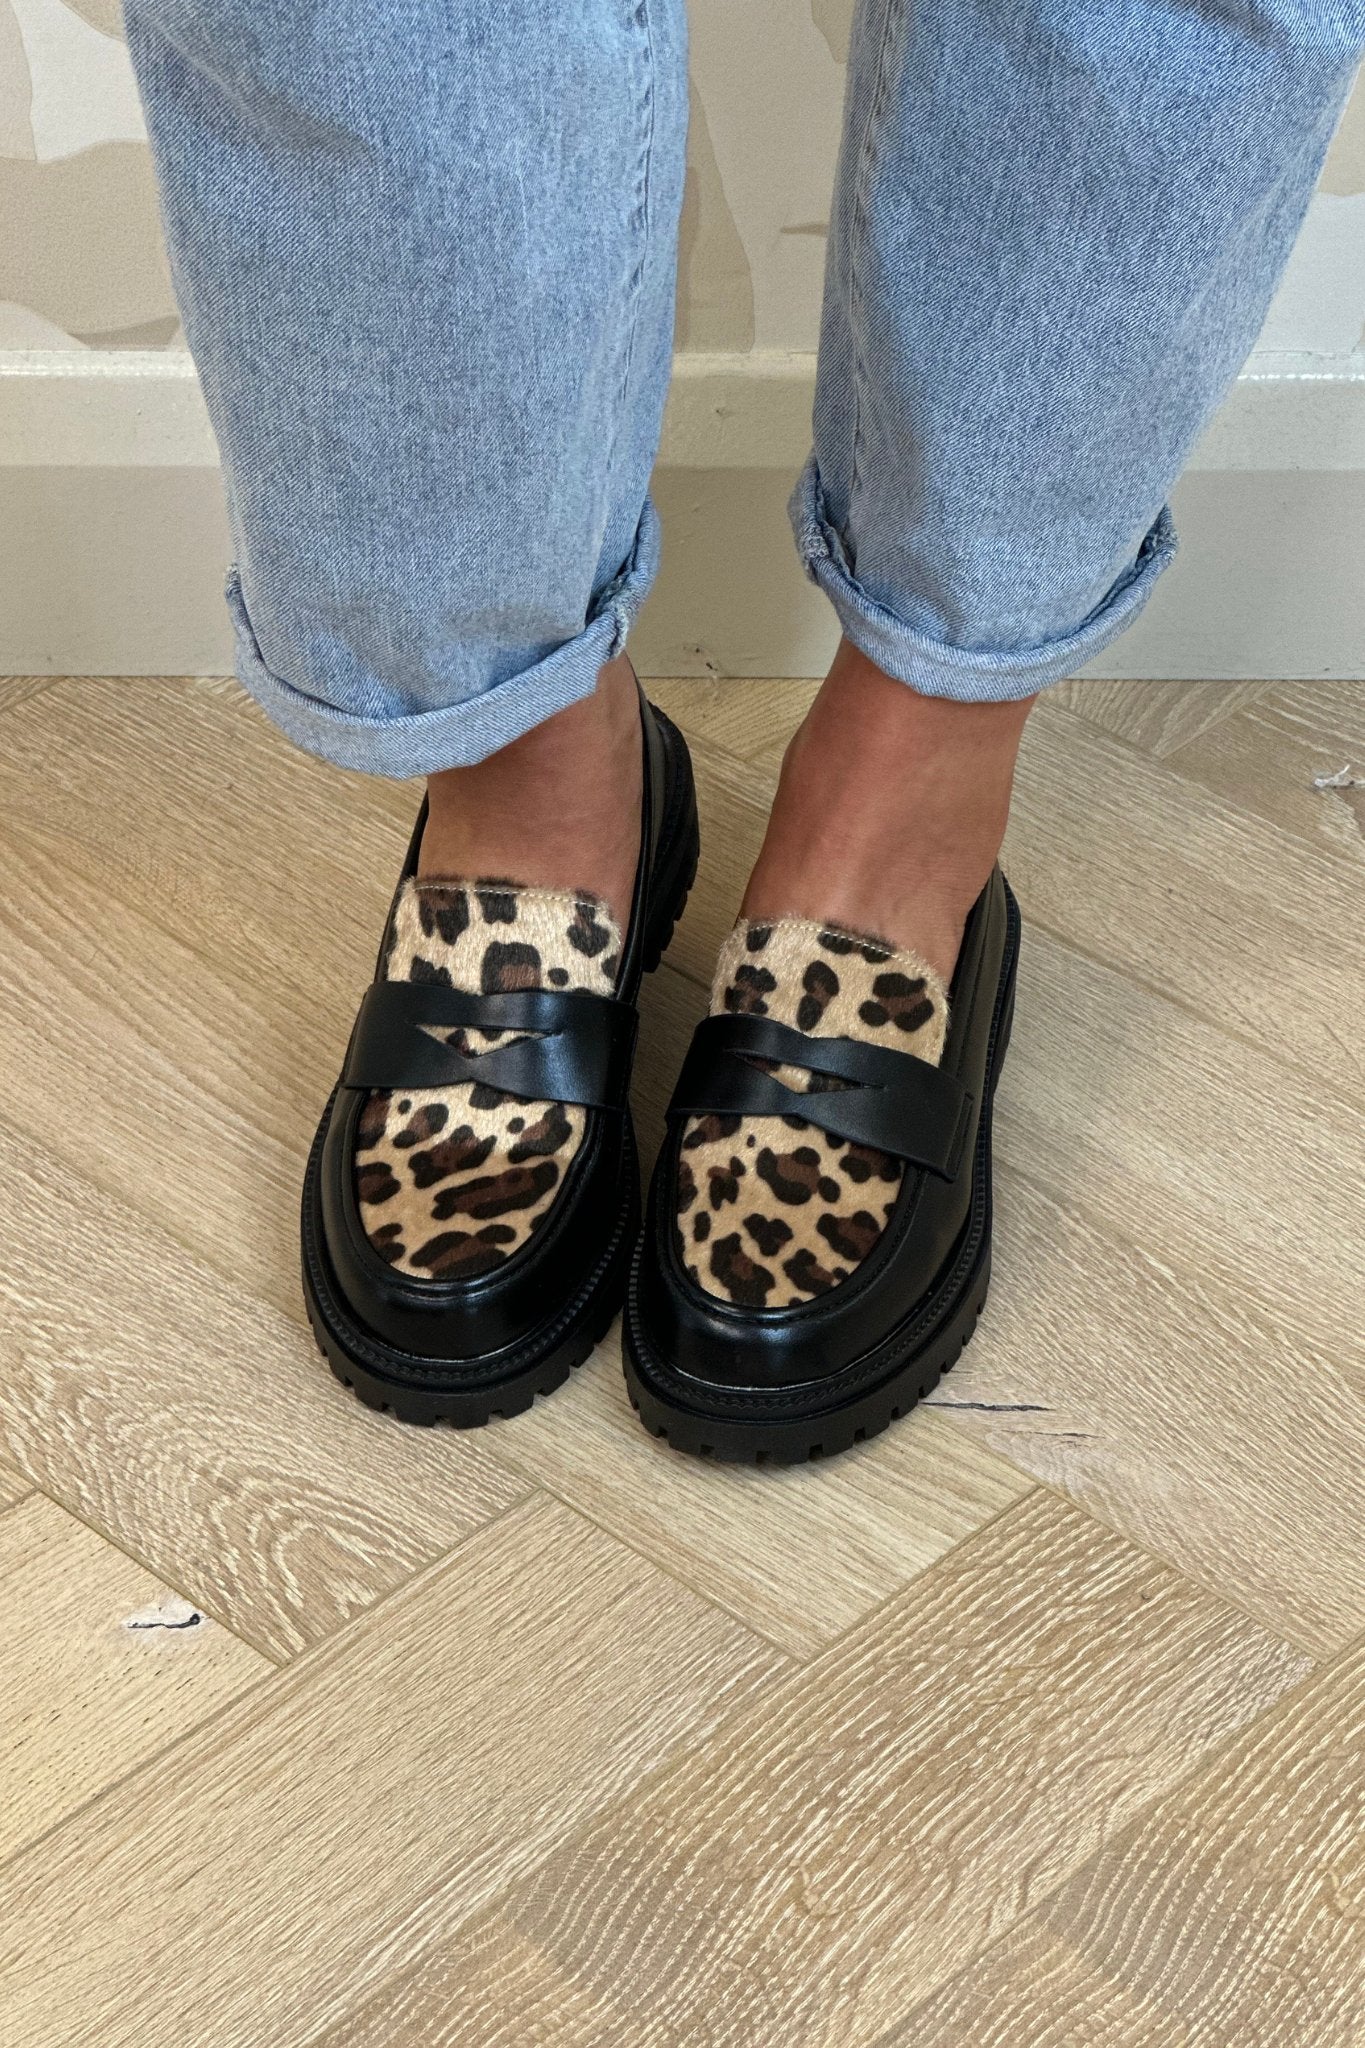 Polly Leopard Print Loafers In Black - The Walk in Wardrobe